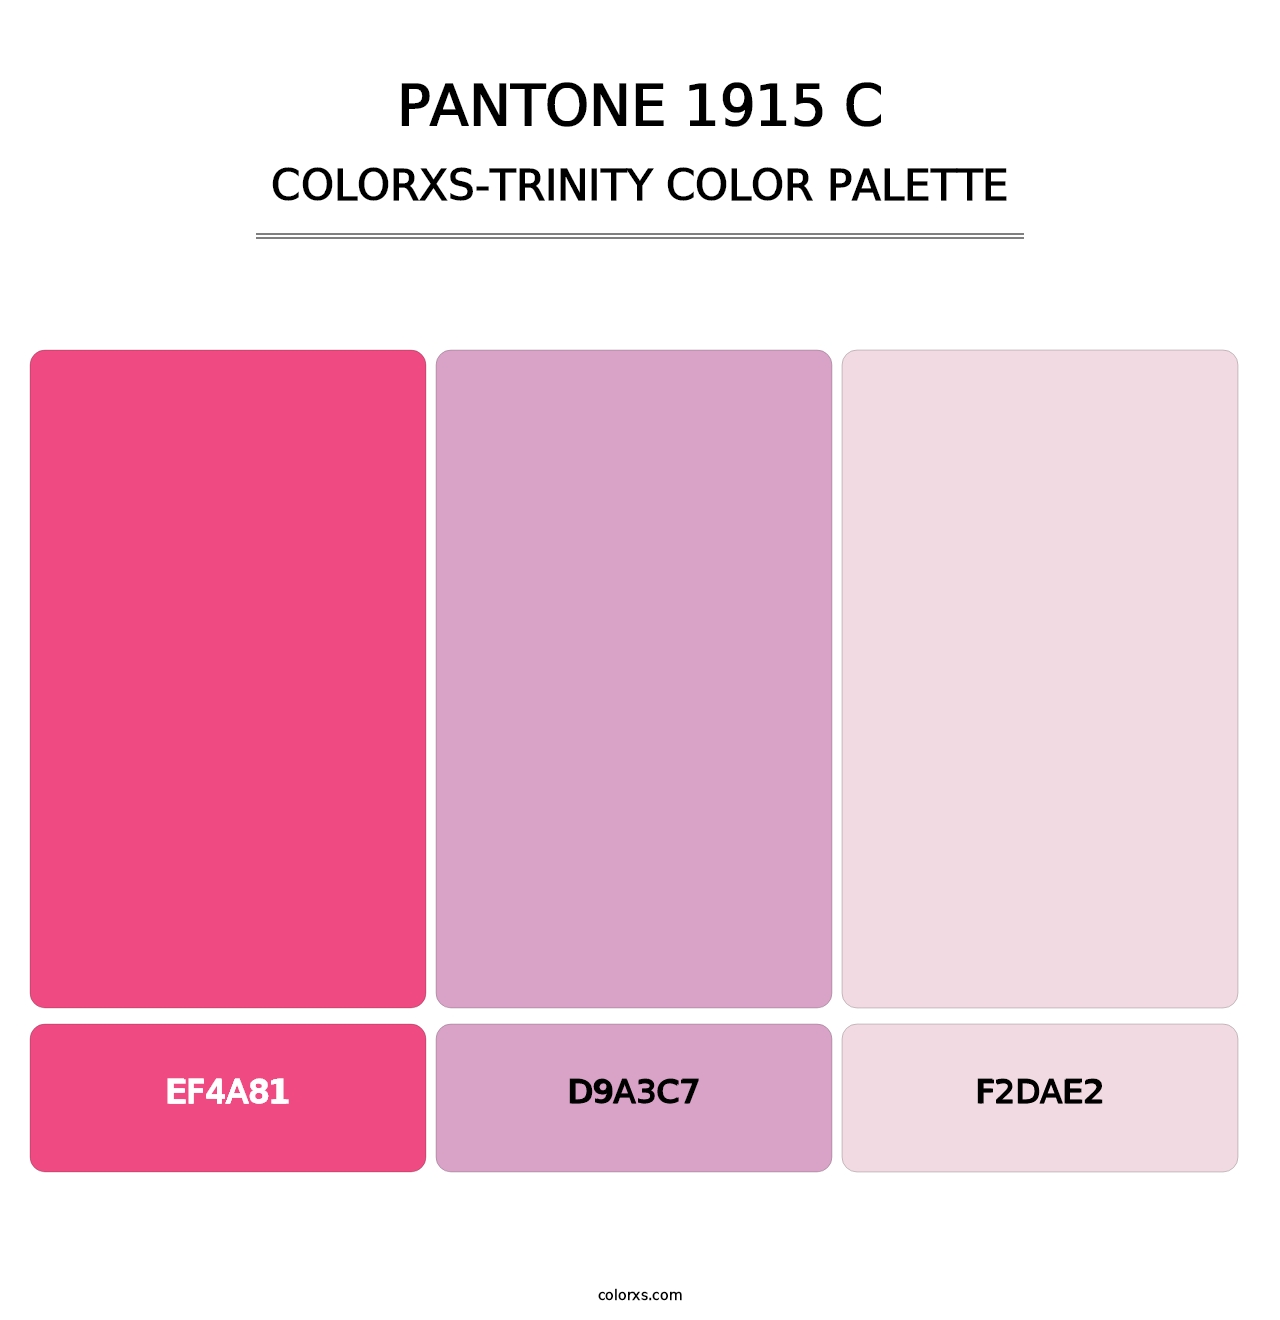 PANTONE 1915 C - Colorxs Trinity Palette